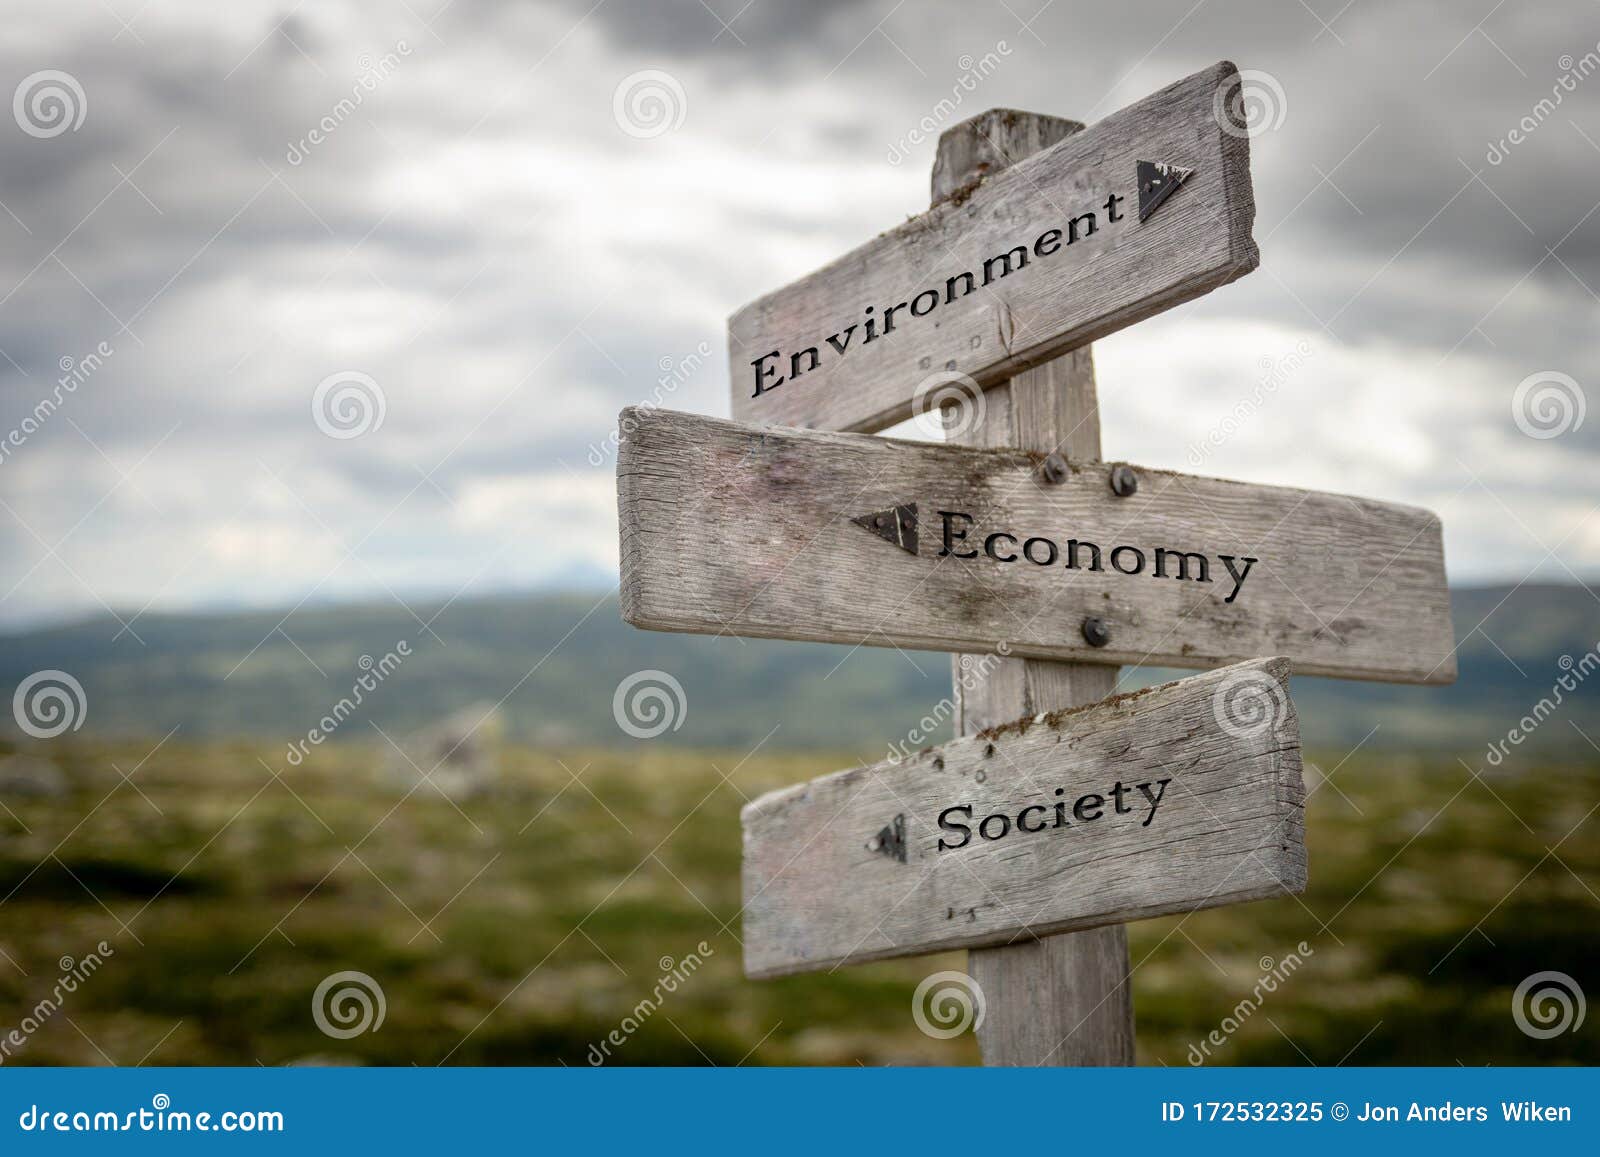 environment, economy and society